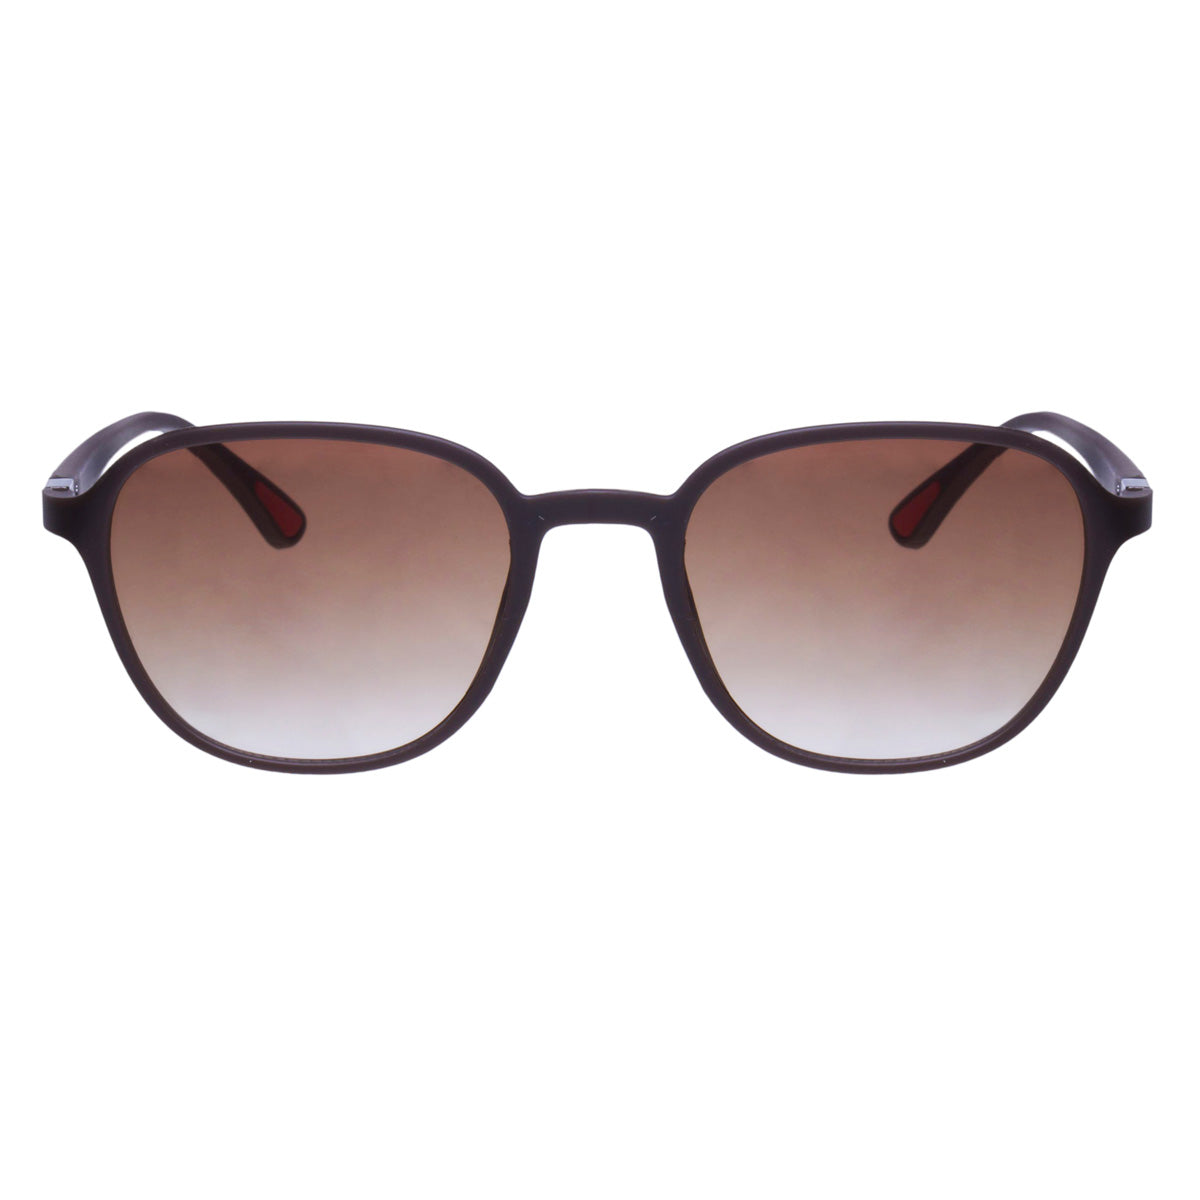 Slim round sunglasses with plastic frames